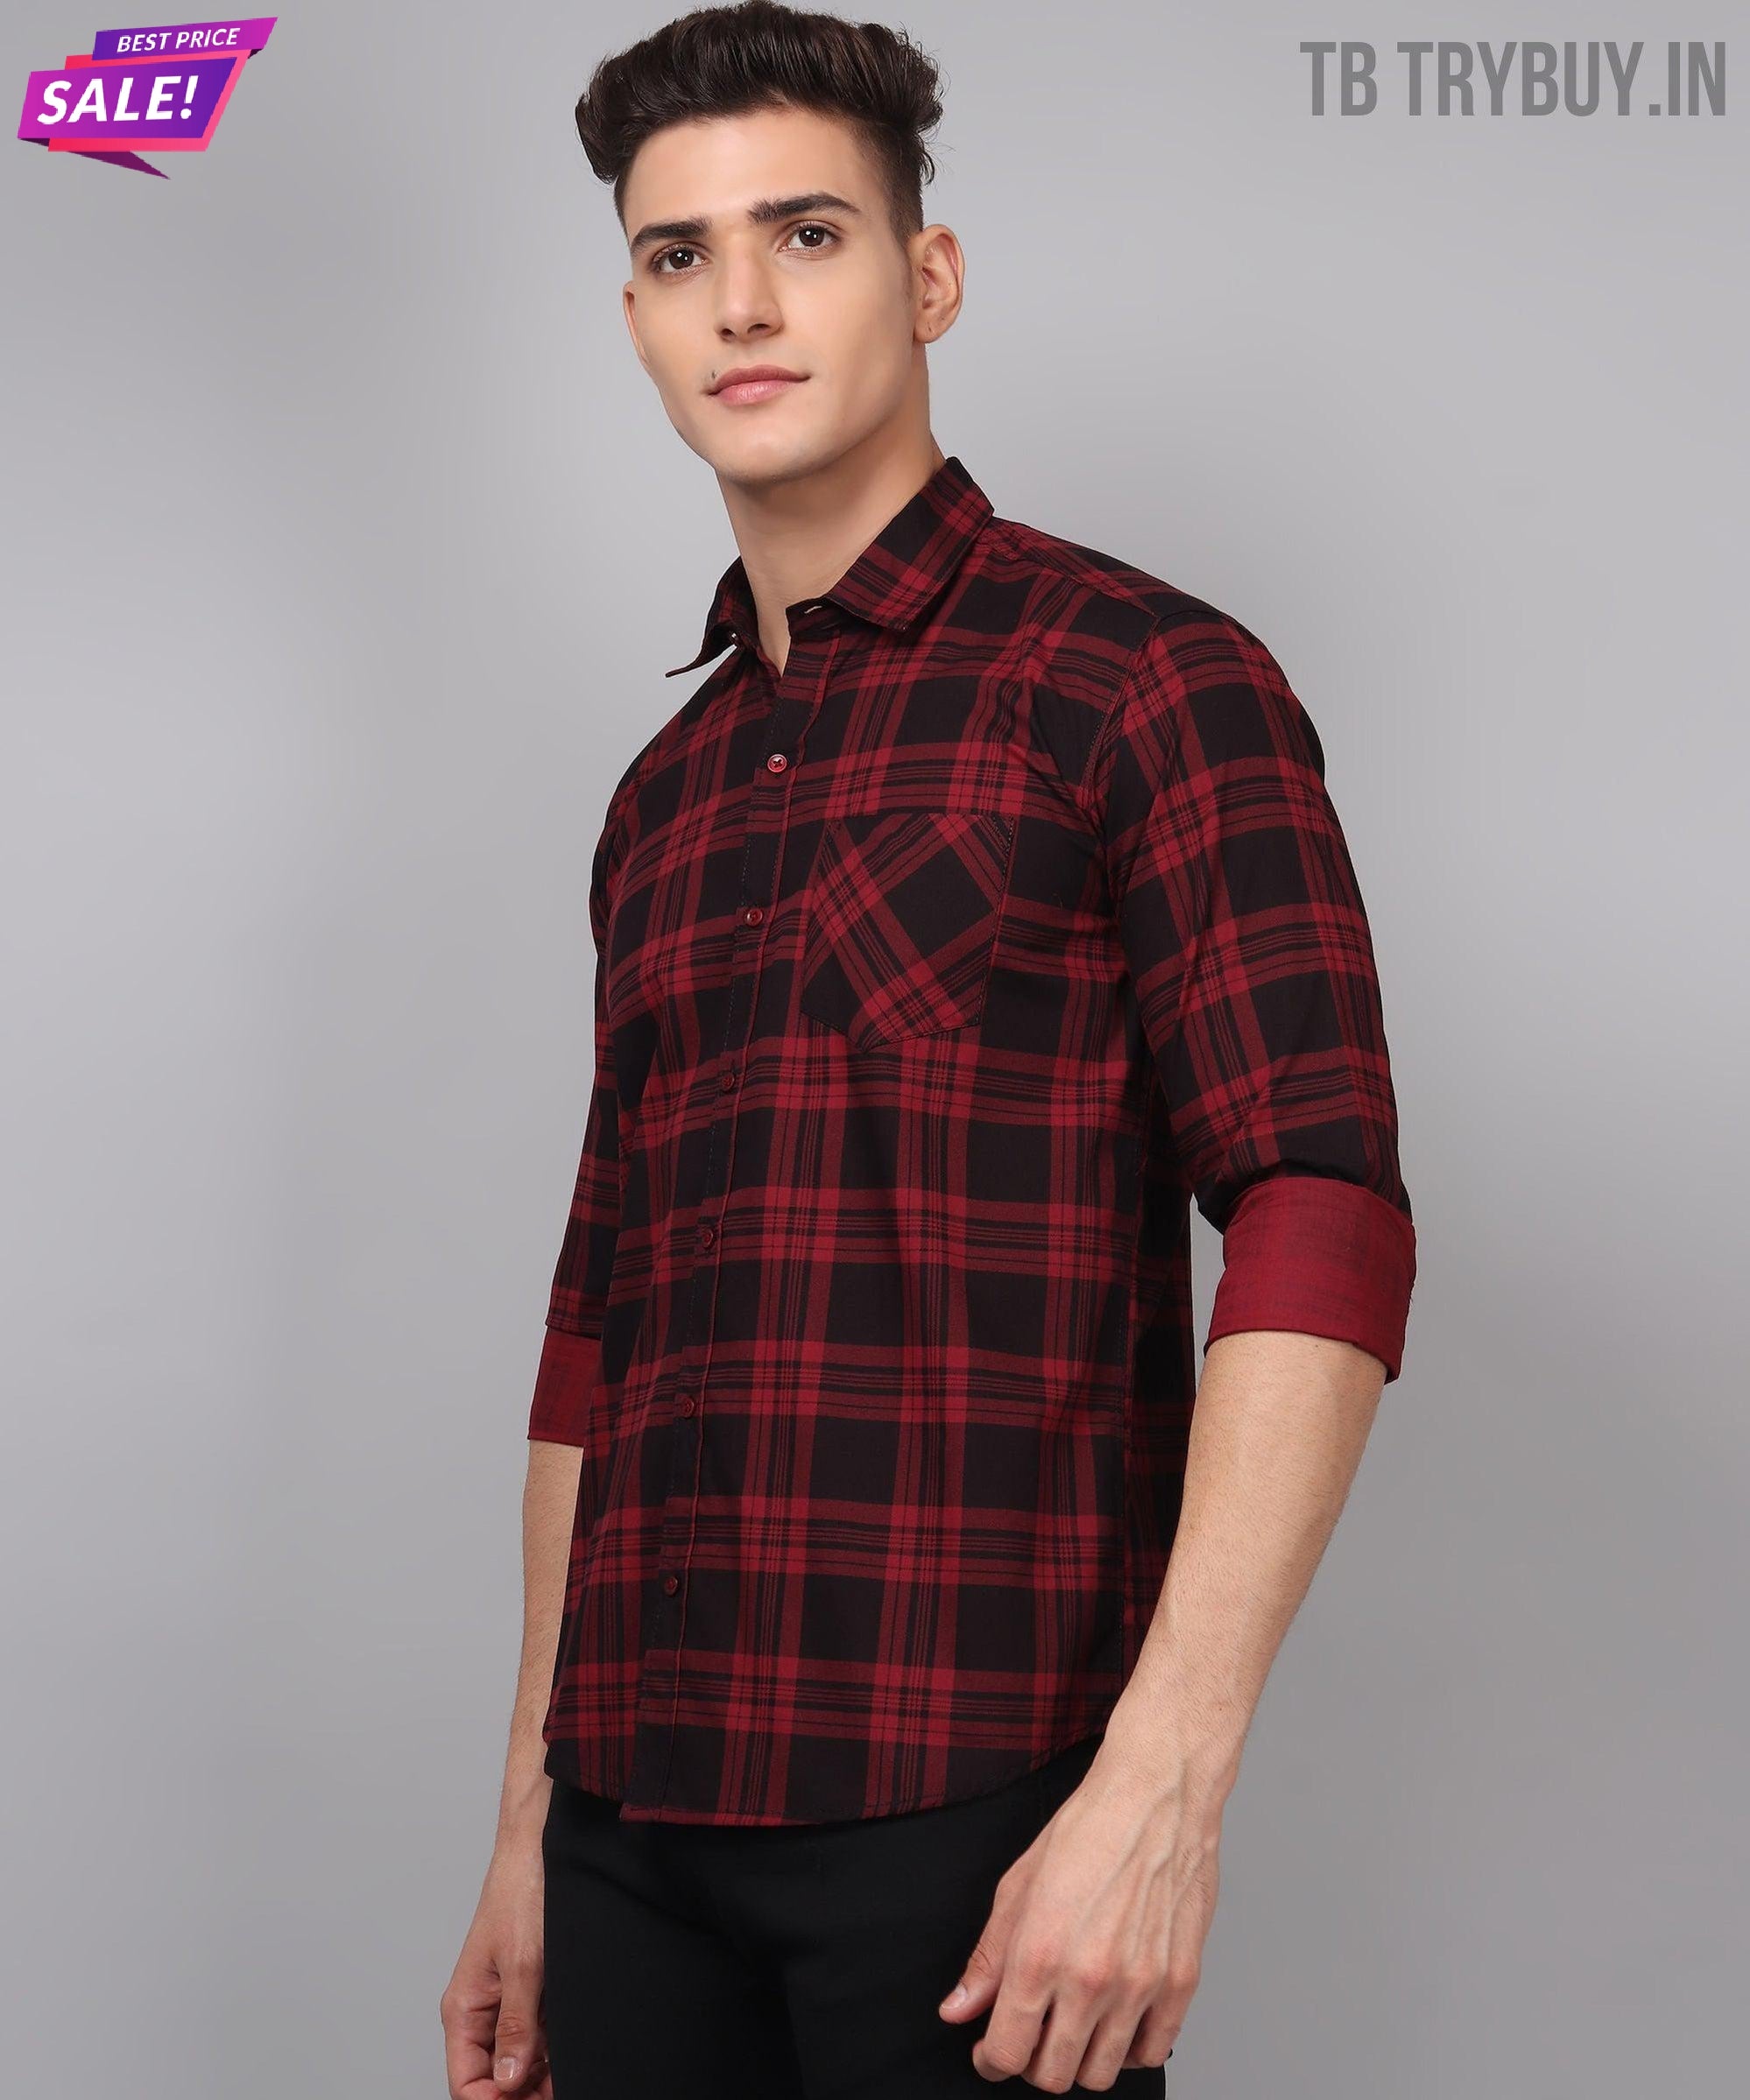 TryBuy Premium Red Black Checks Shirts for Men